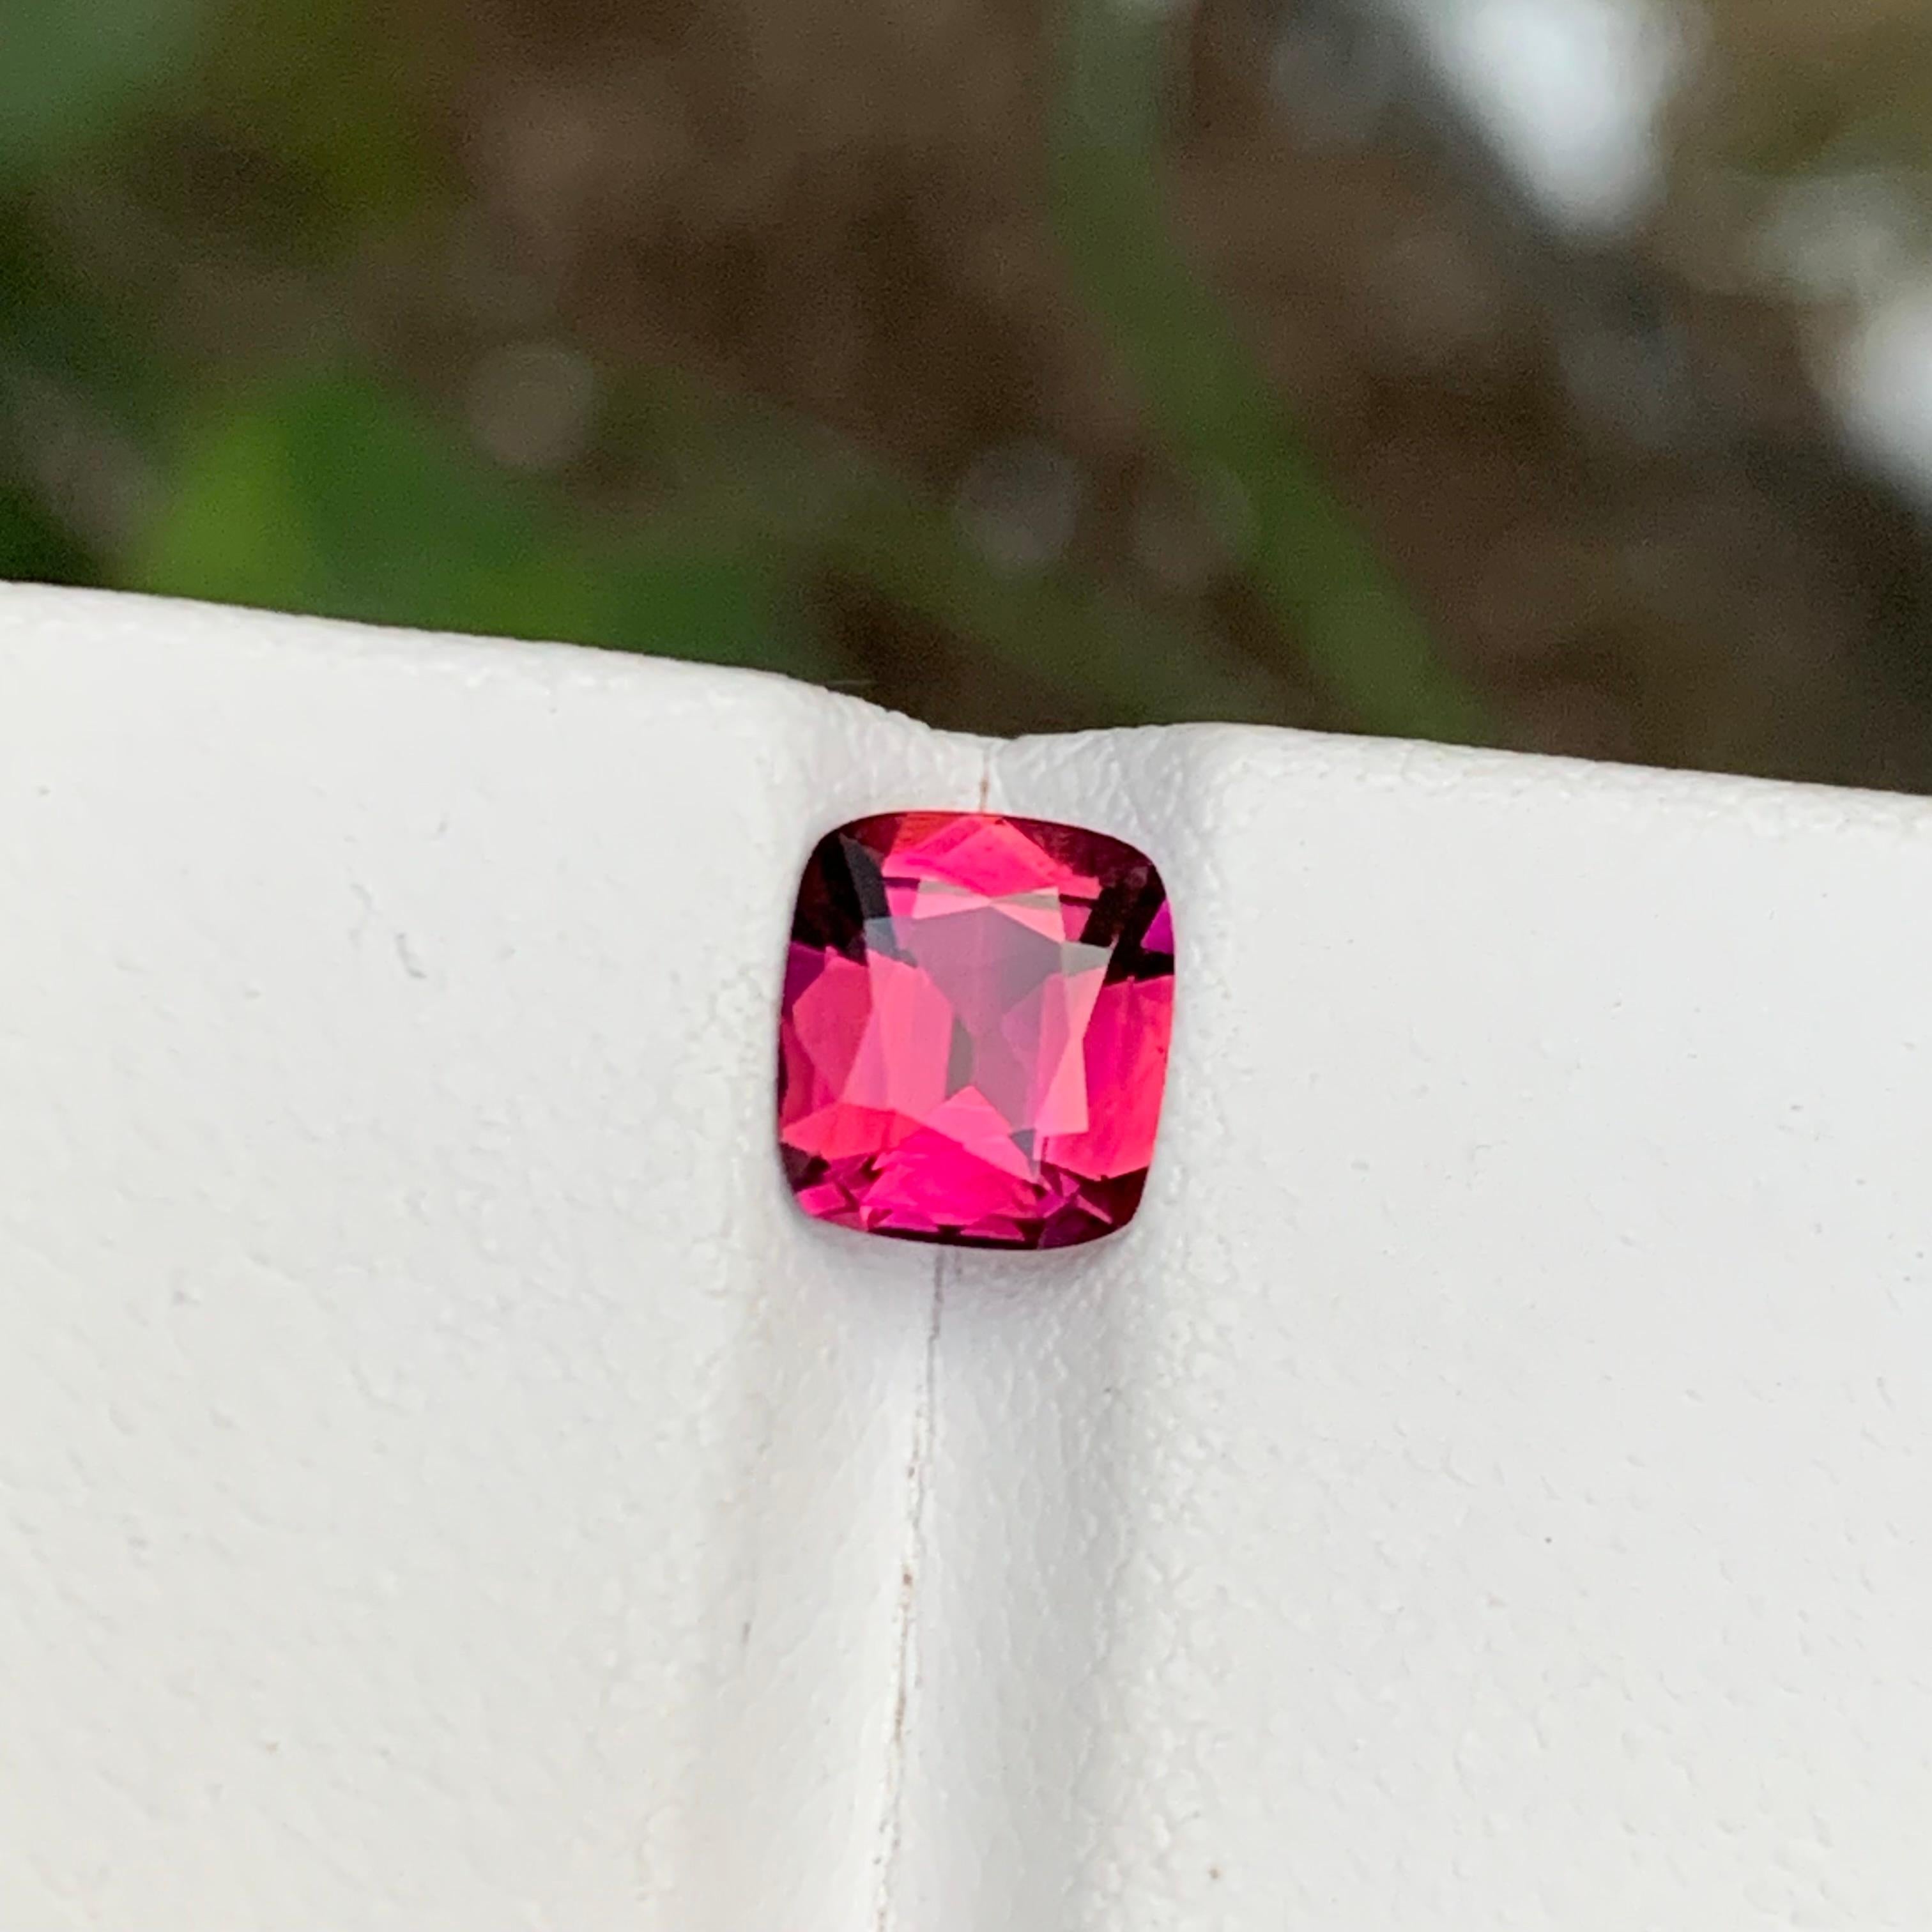 Rare Reddish Pink Rubellite Tourmaline Gemstone, 1.20 Ct Cushion Cut for Ring For Sale 2